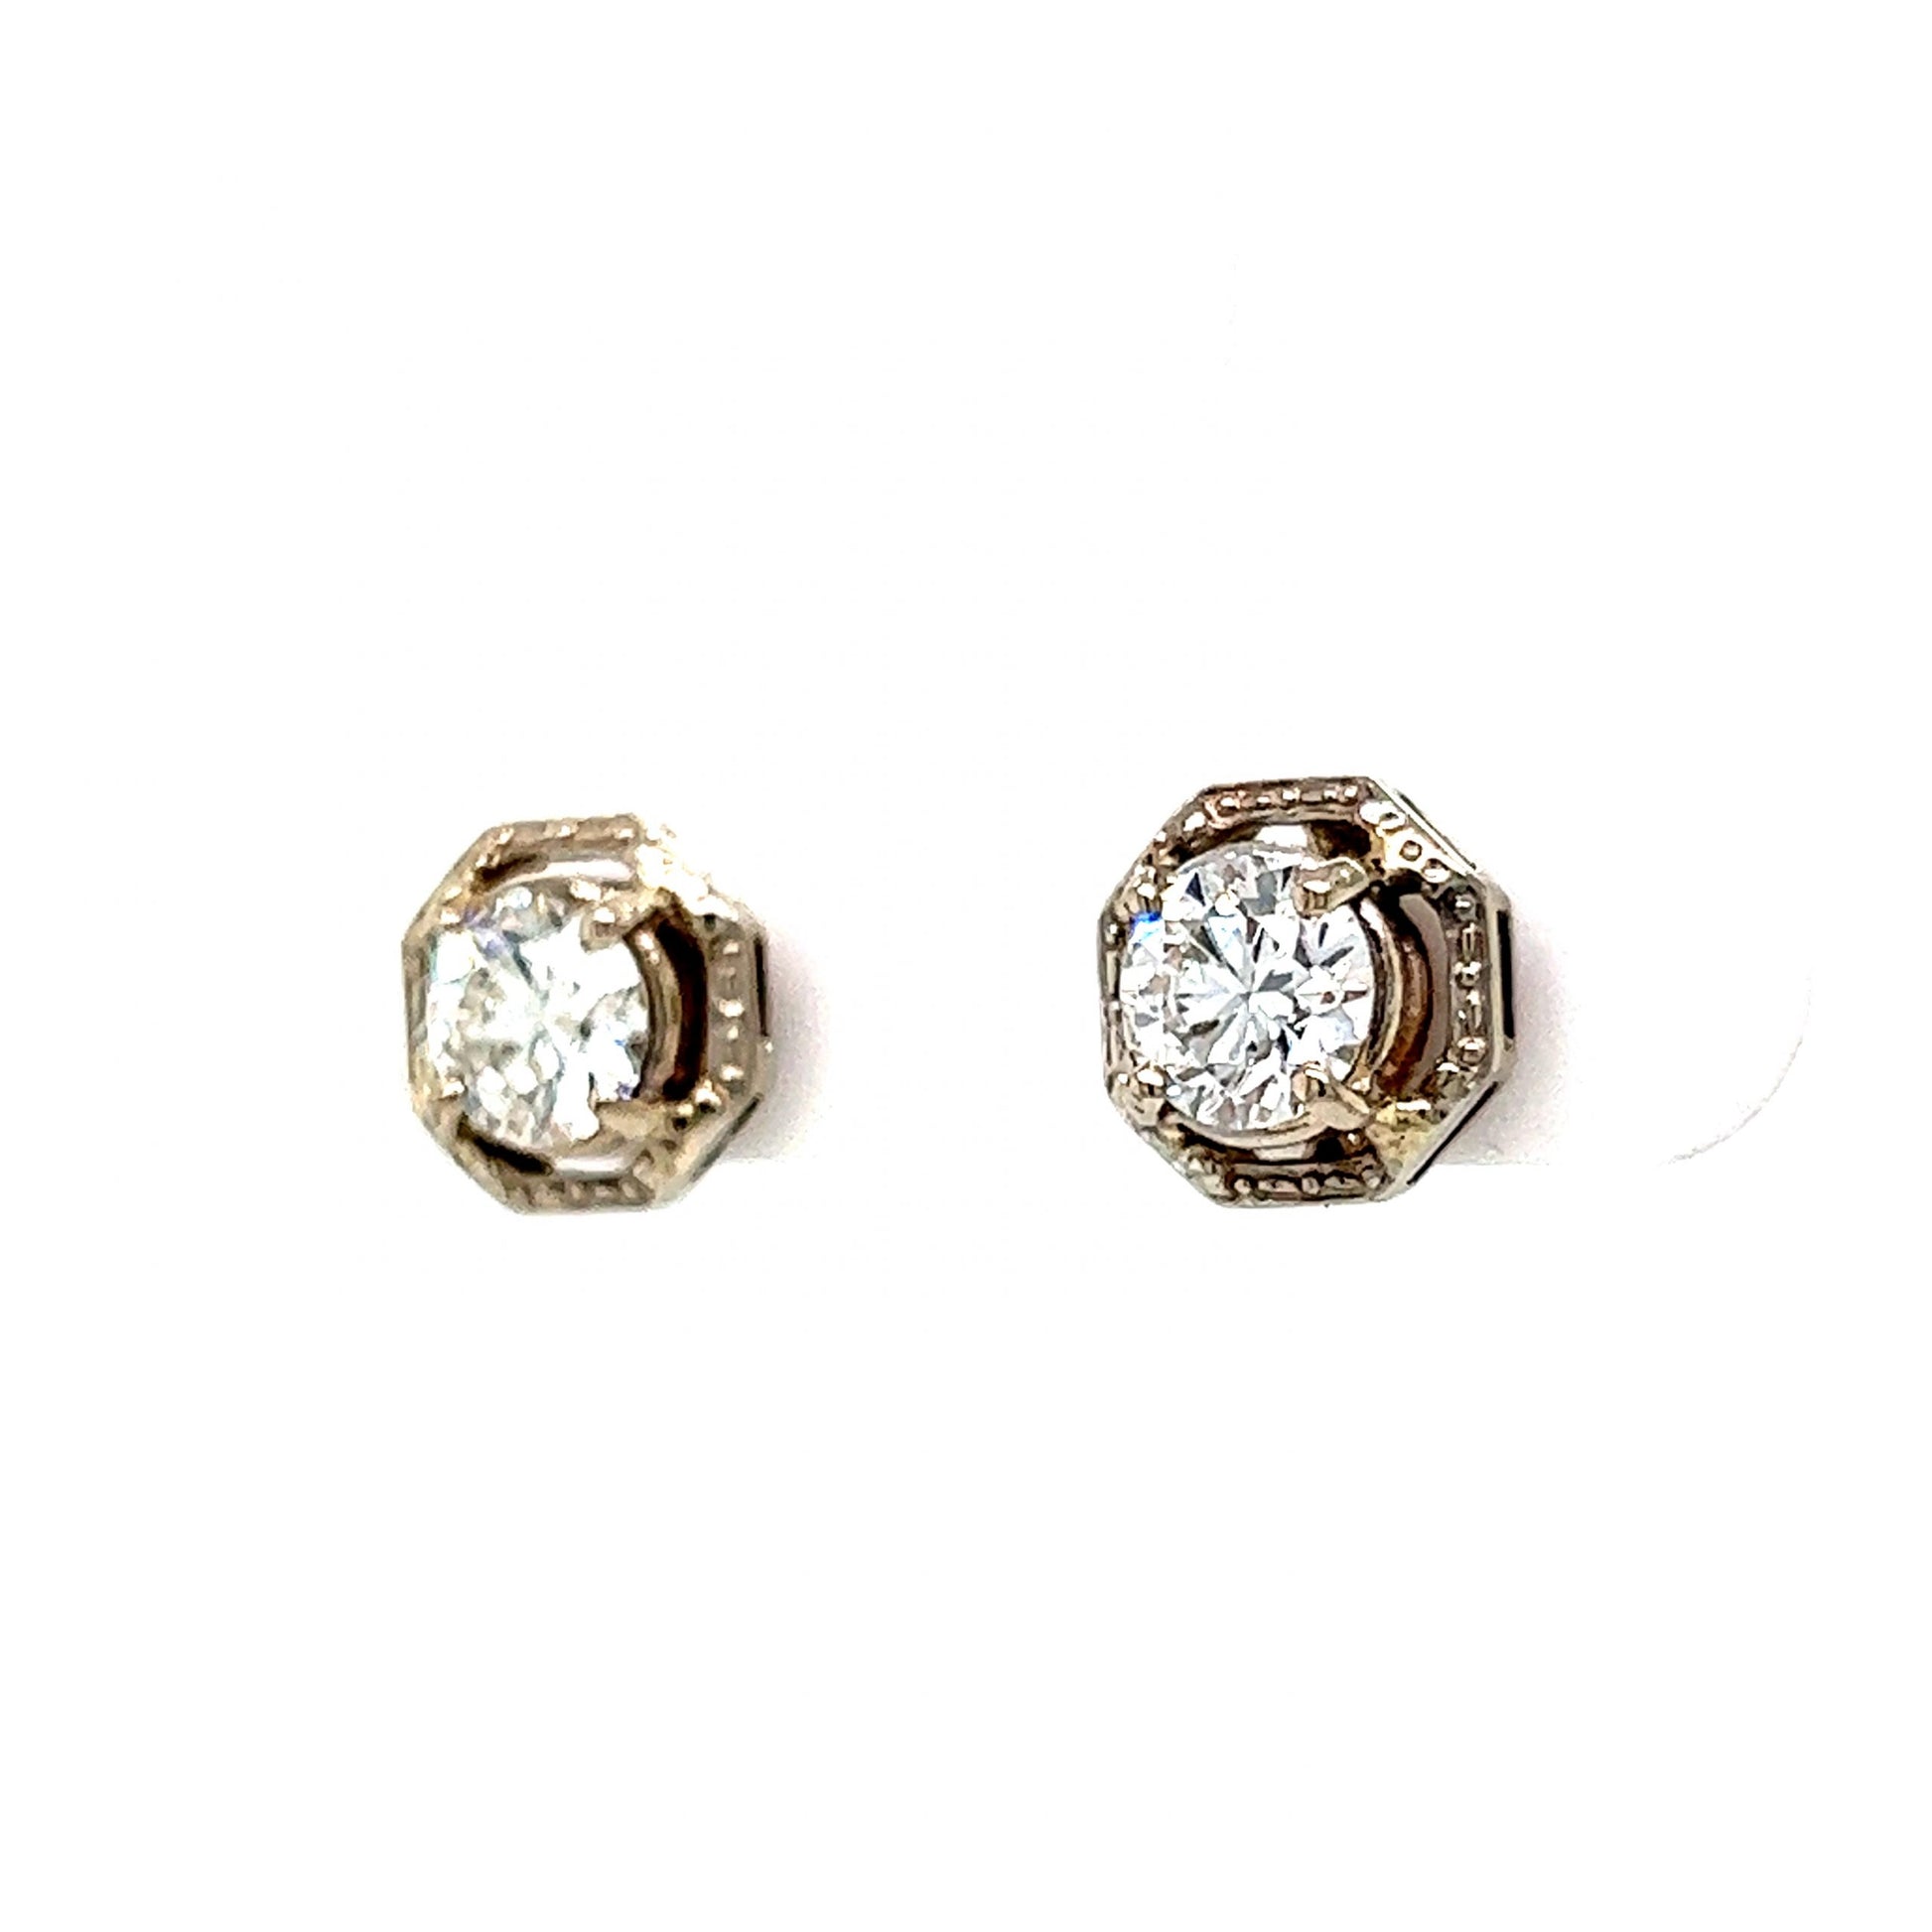 1.02 Round Brilliant Diamond Stud Earrings in Platinum & 14kComposition: Platinum/14 Karat White GoldTotal Diamond Weight: 1.02 ctTotal Gram Weight: 2.0 g